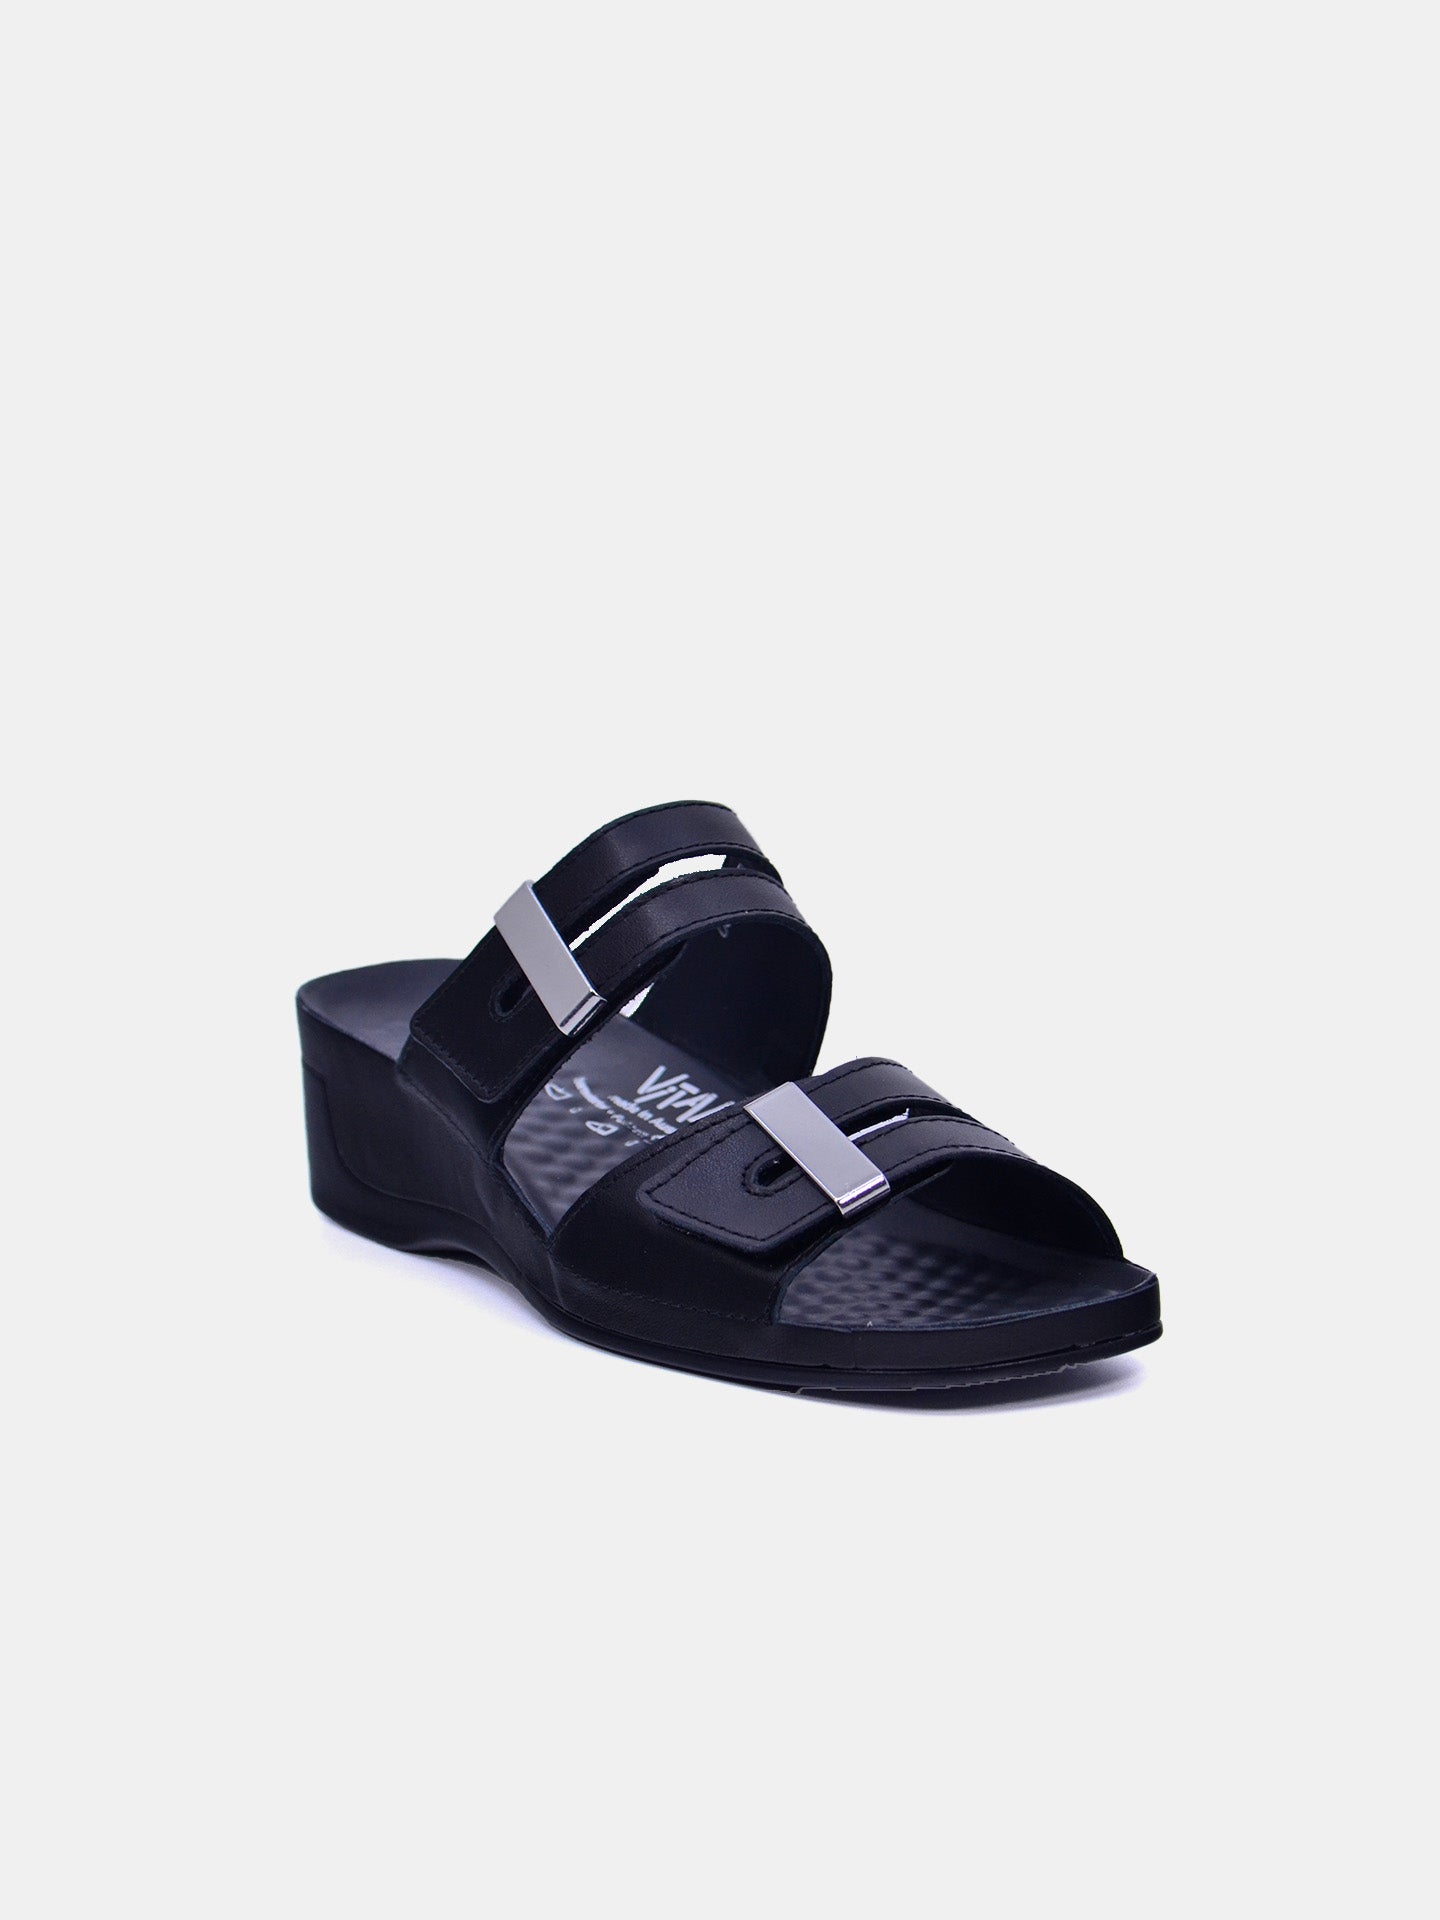 Vital 0836 Women's Heeled Sandals #color_Black